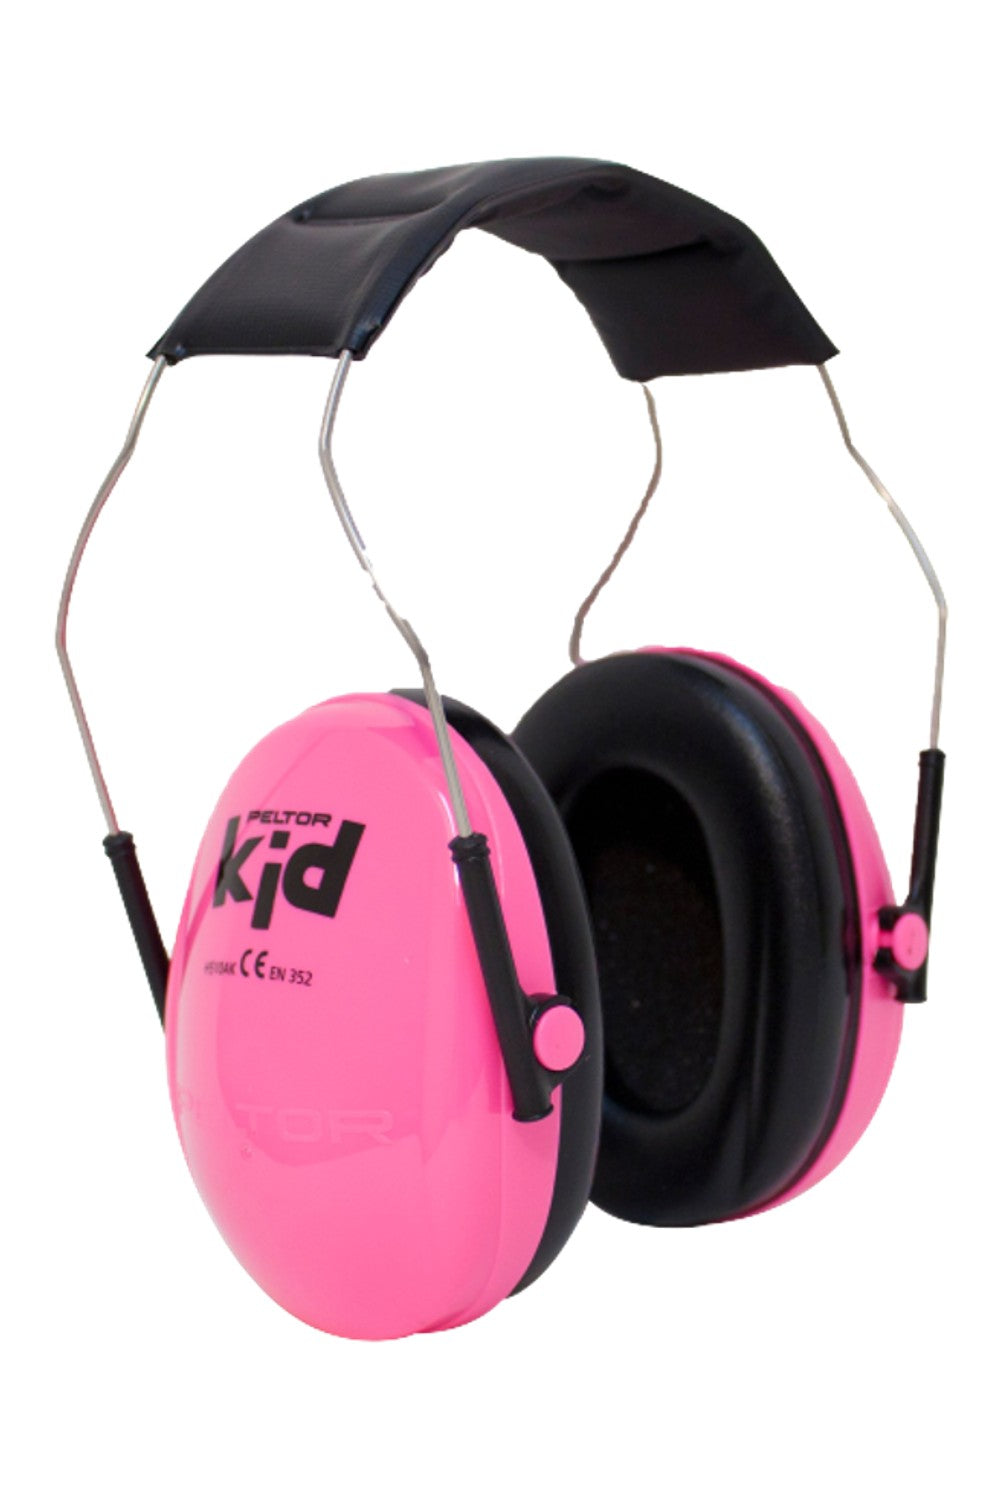 Peltor Kids Junior Hearing Protection In Pink